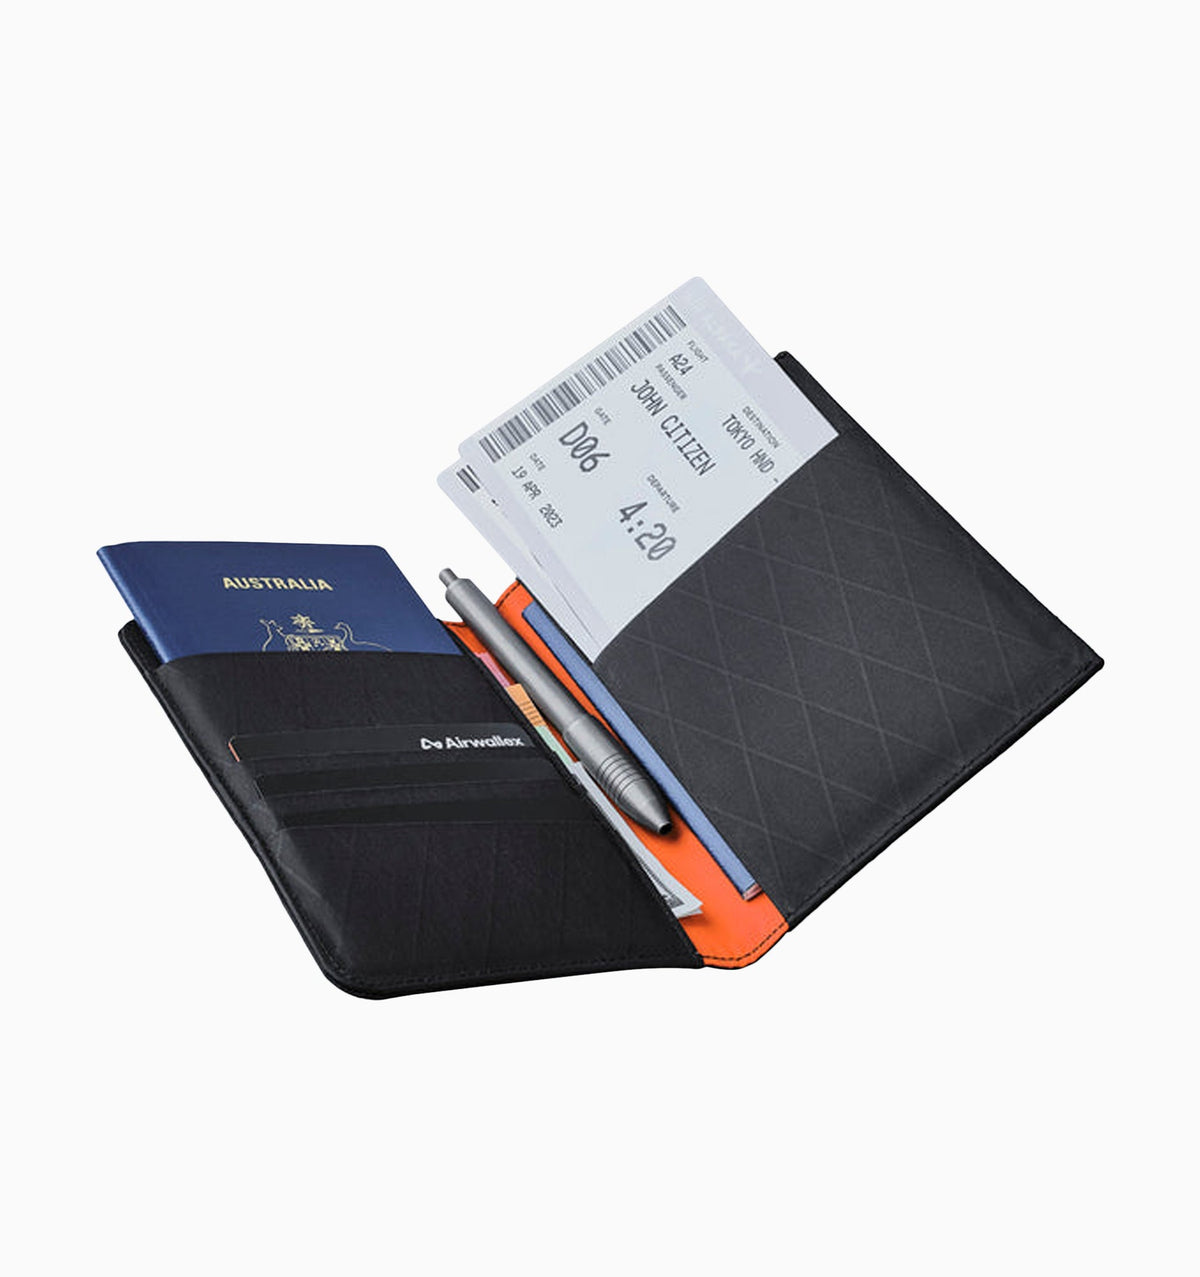 Alpaka ARK Bifold Passport Wallet - Black VX21